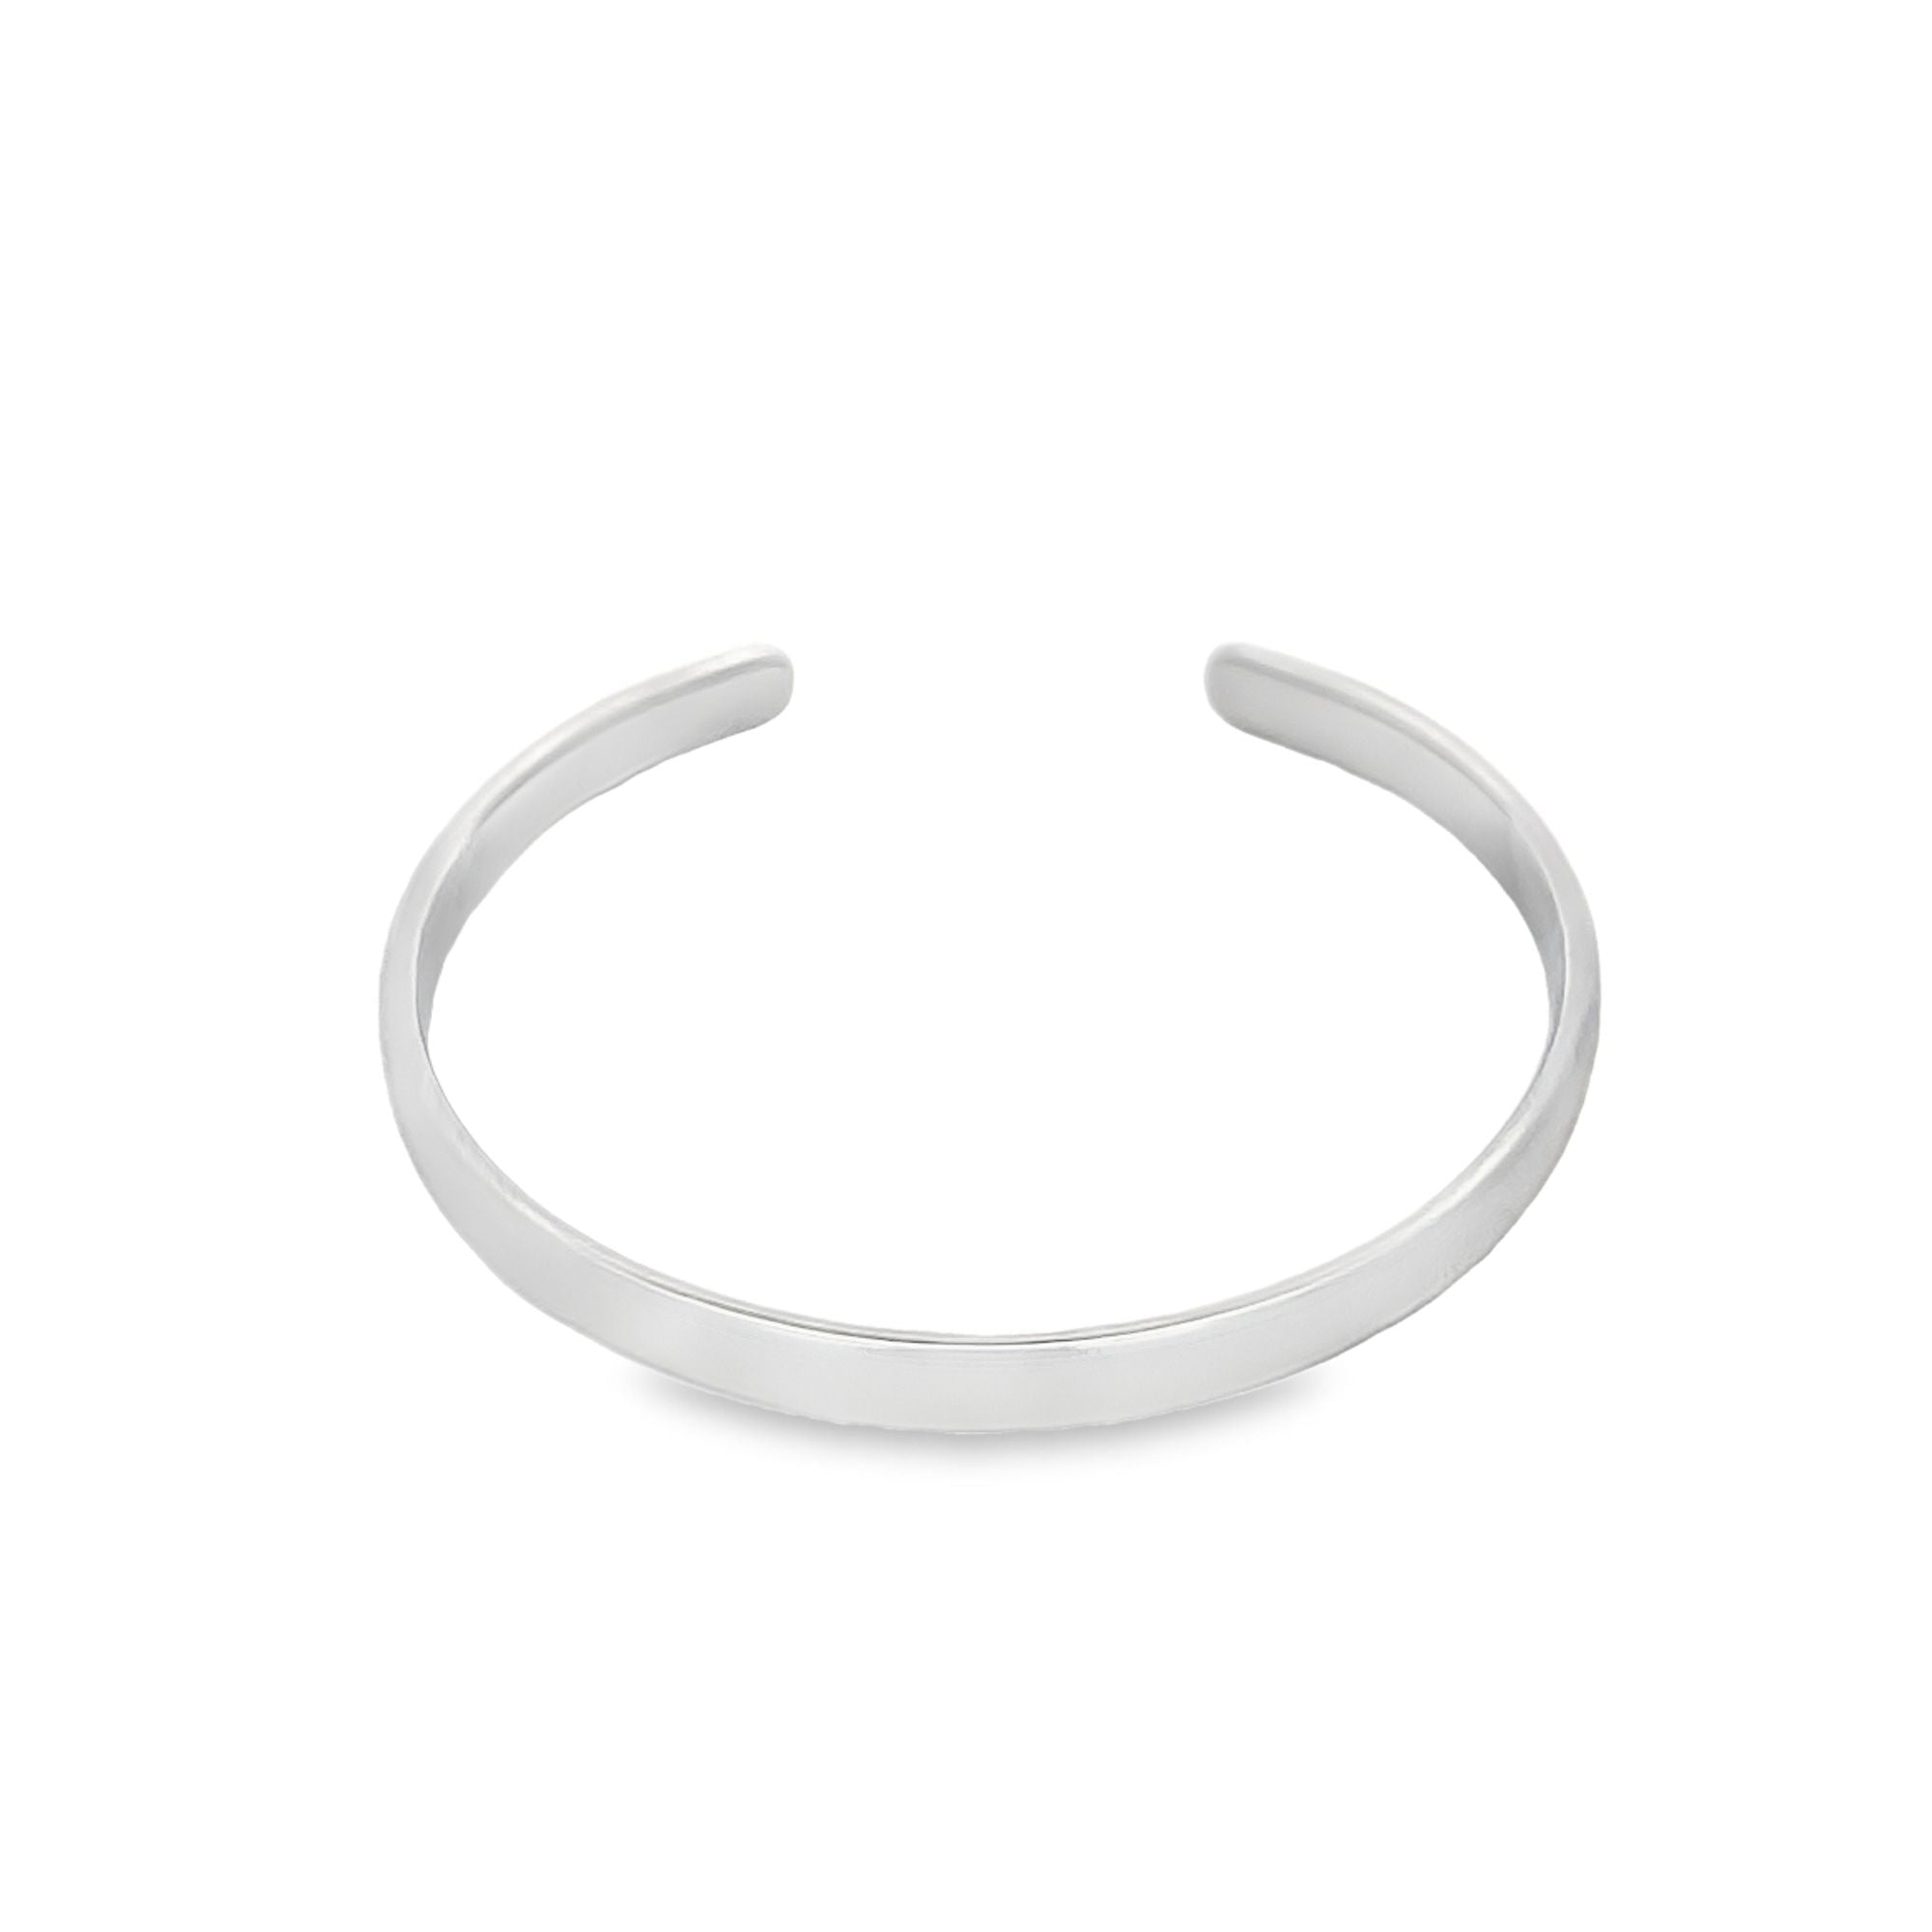 Wrist Cuff Bangle Bracelet (B10)